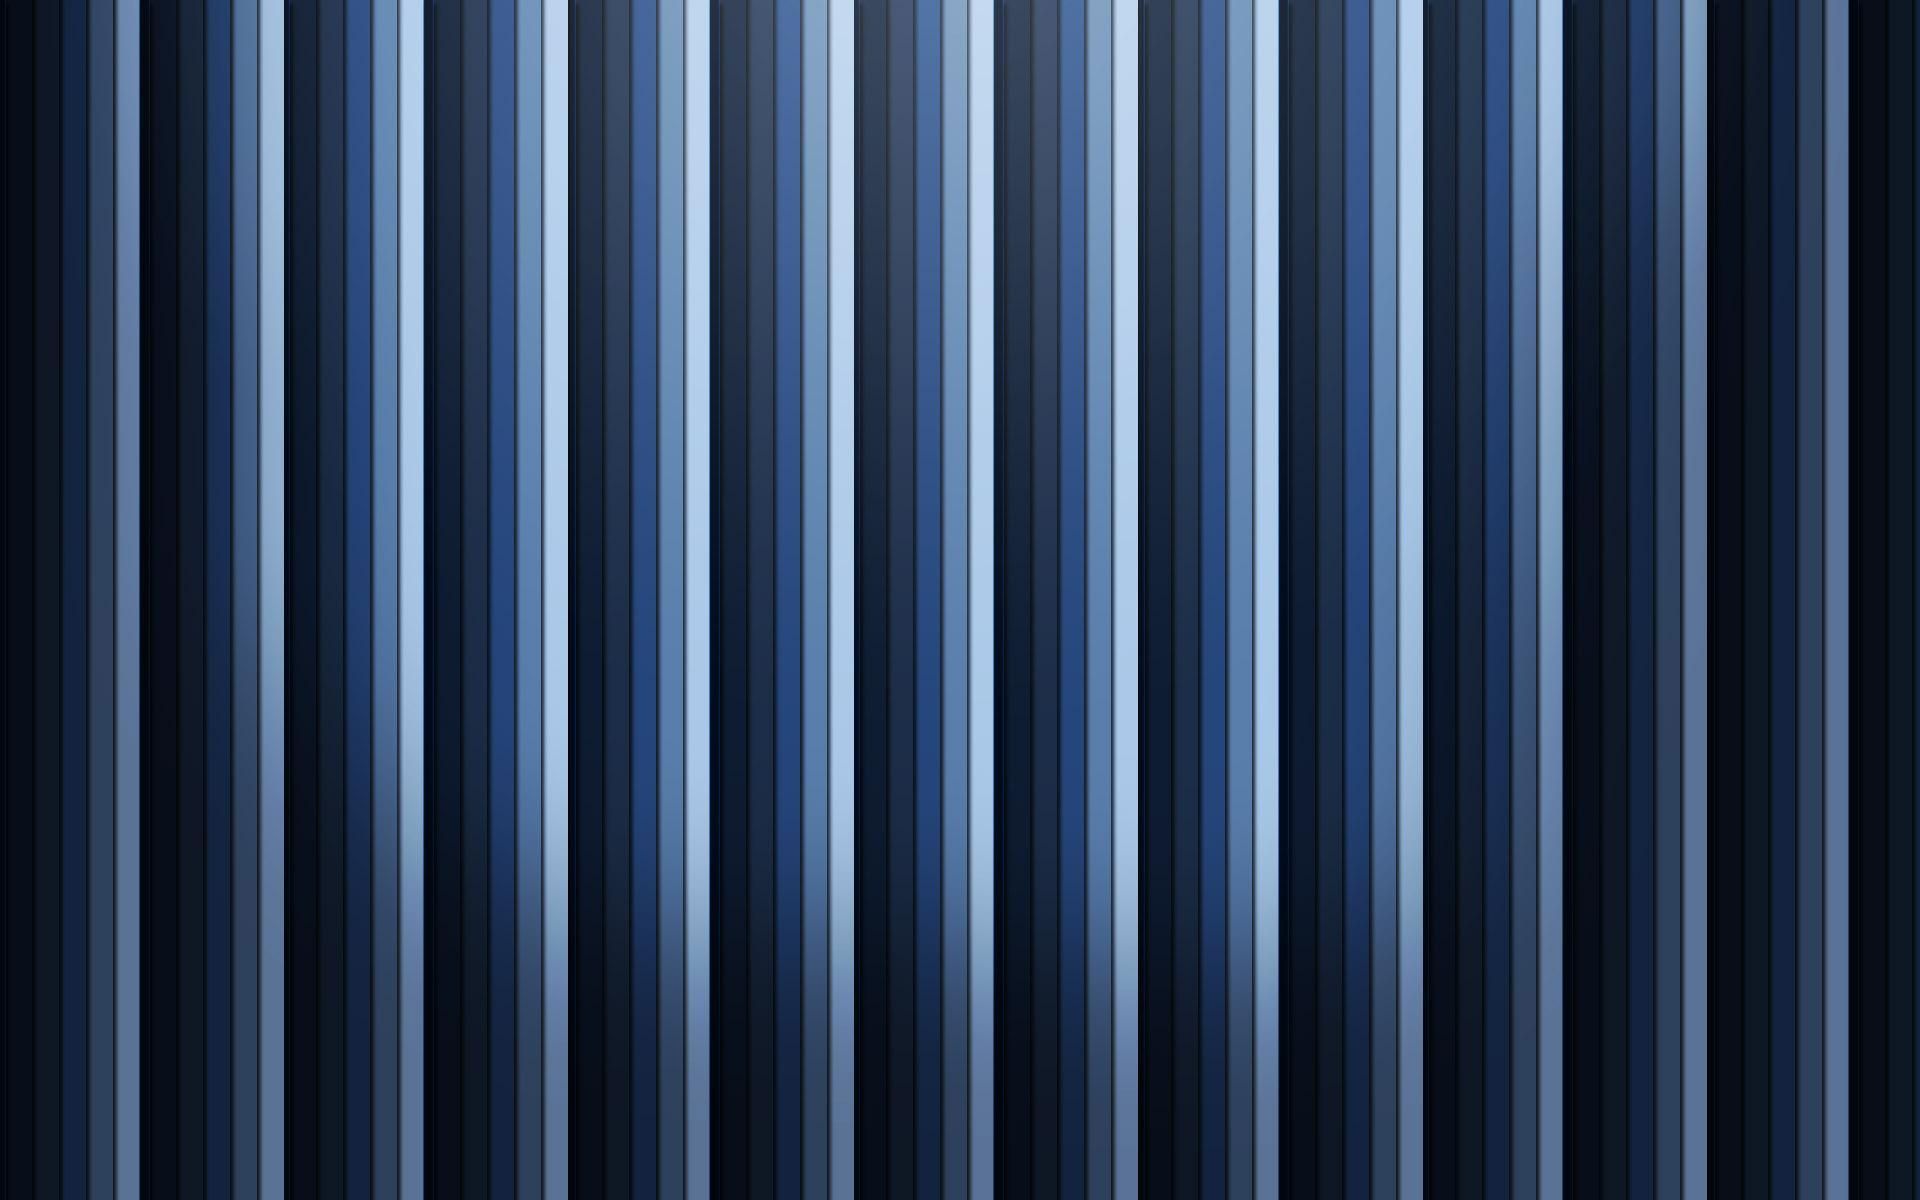 1920x1200 | Black and Blue Striped Desktop Wallpaper